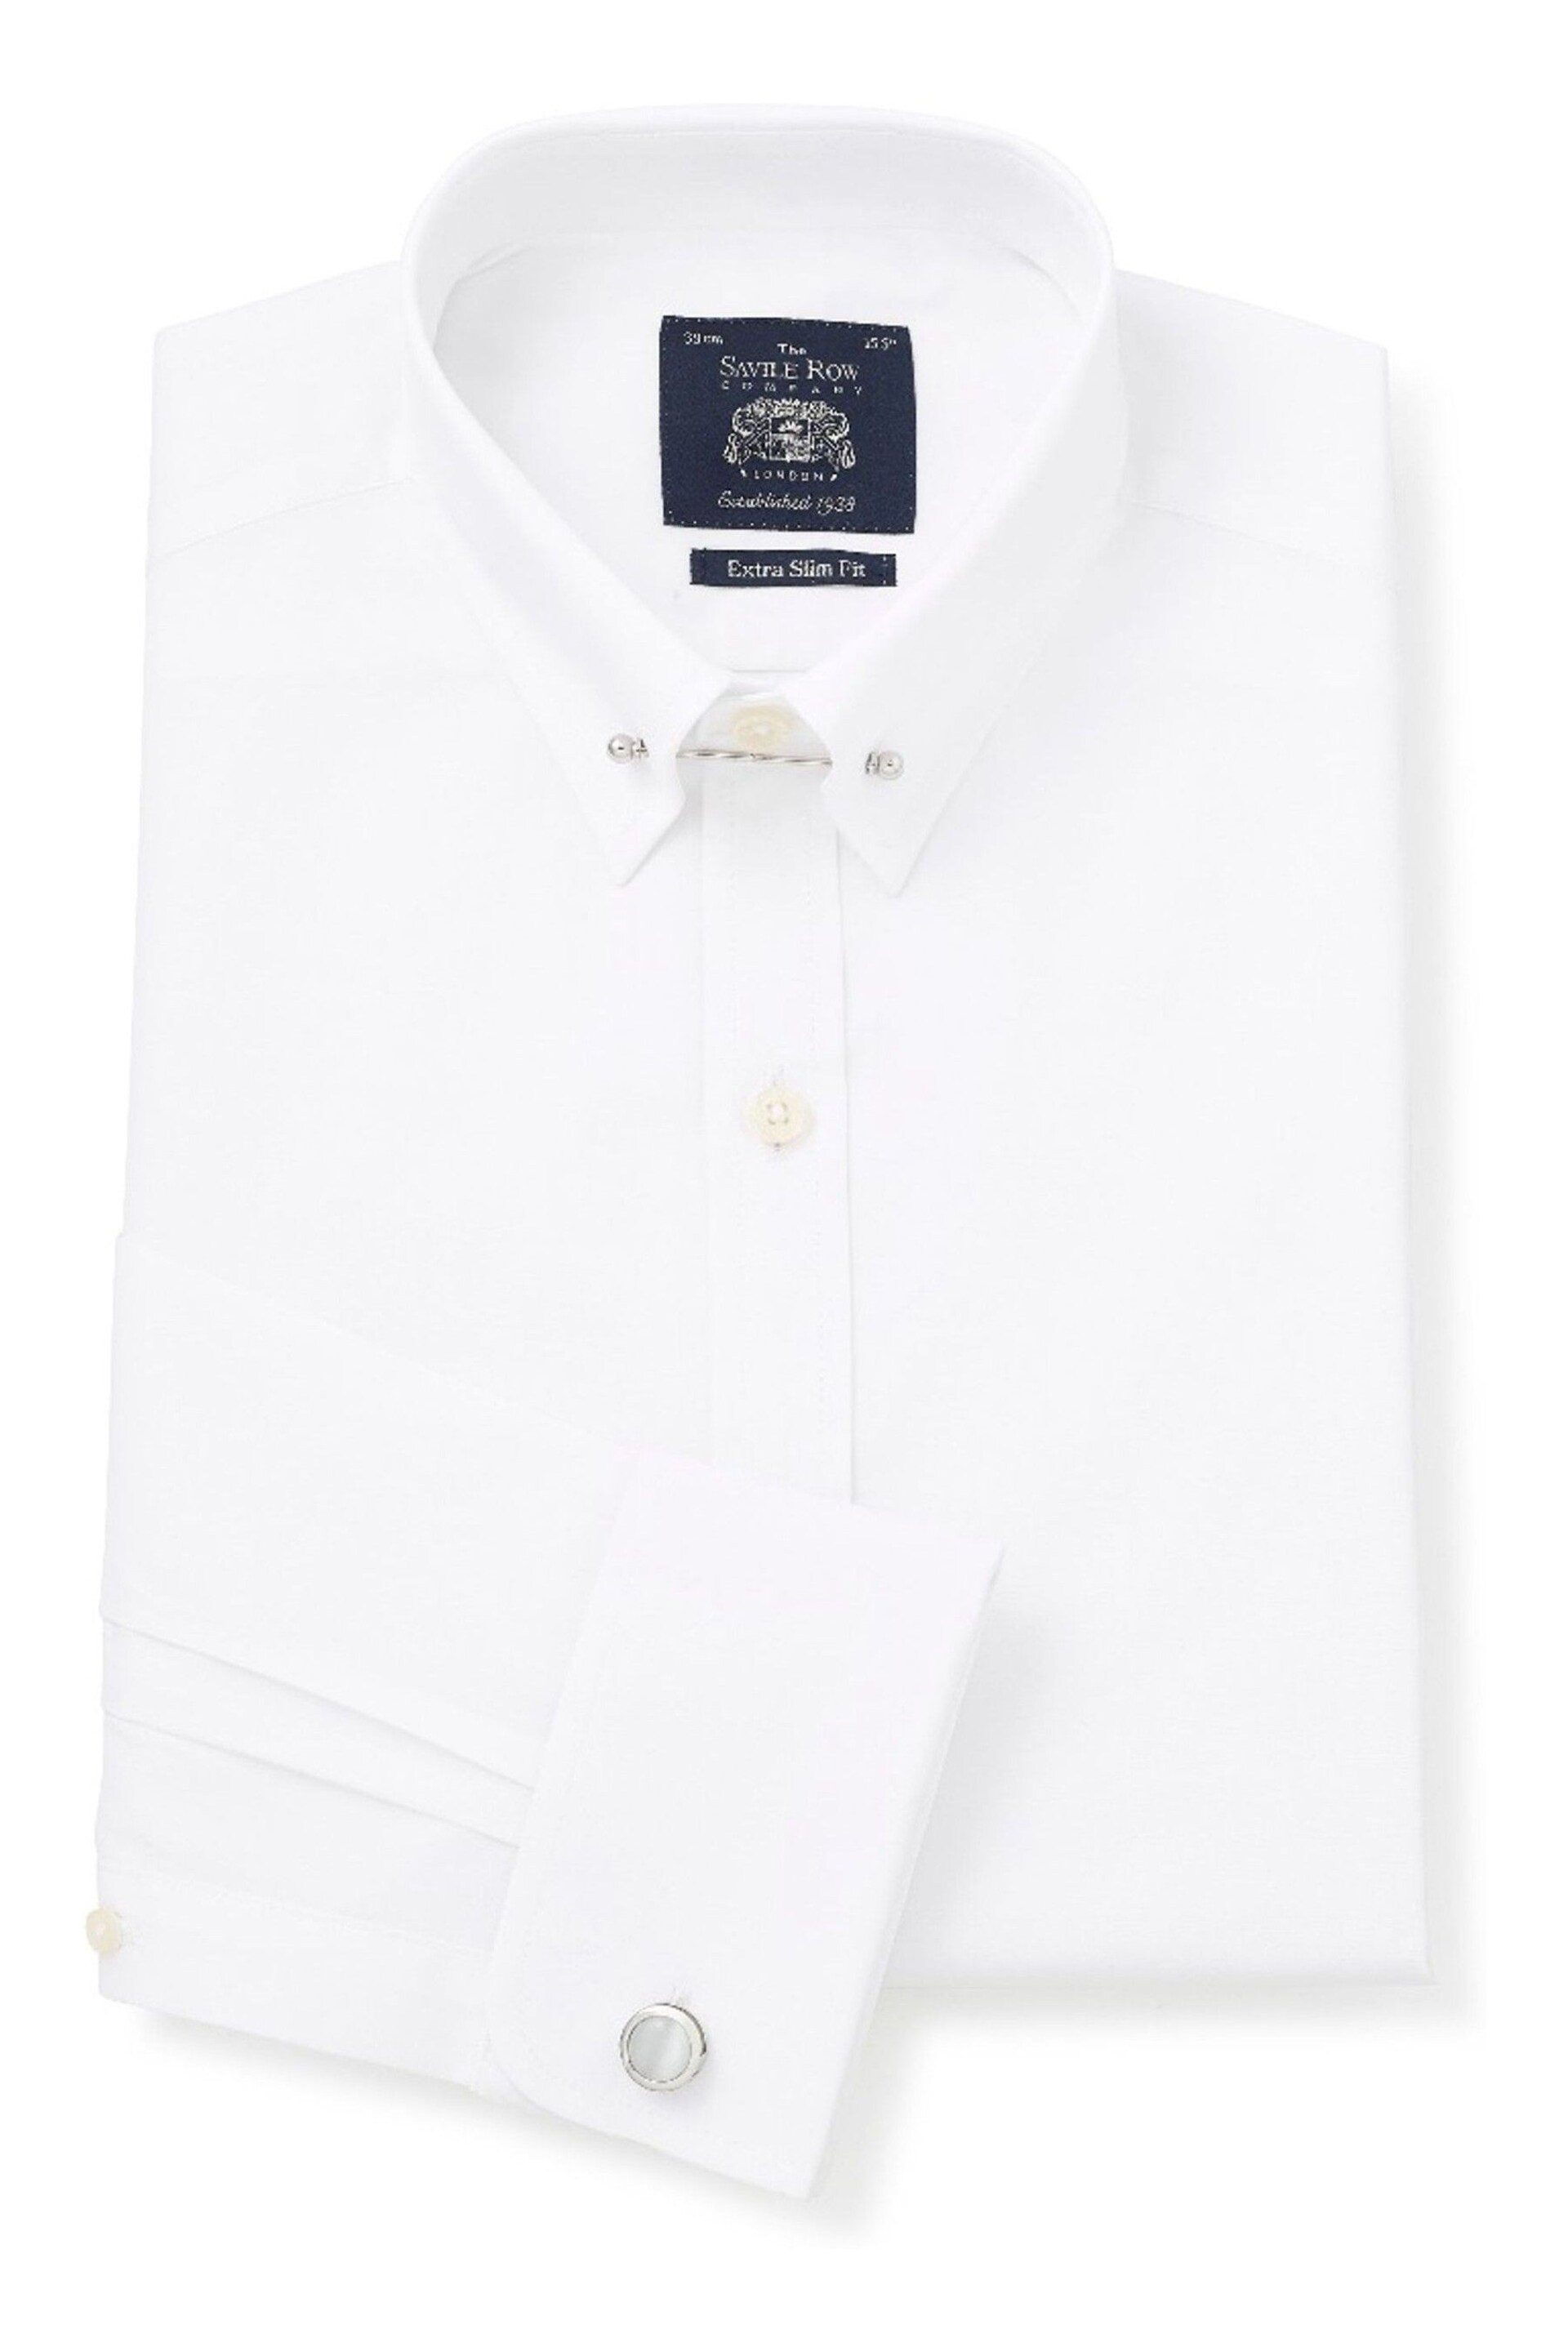 Savile Row Co White Extra Slim Pin Collar Double Cuff Shirt - Image 2 of 4